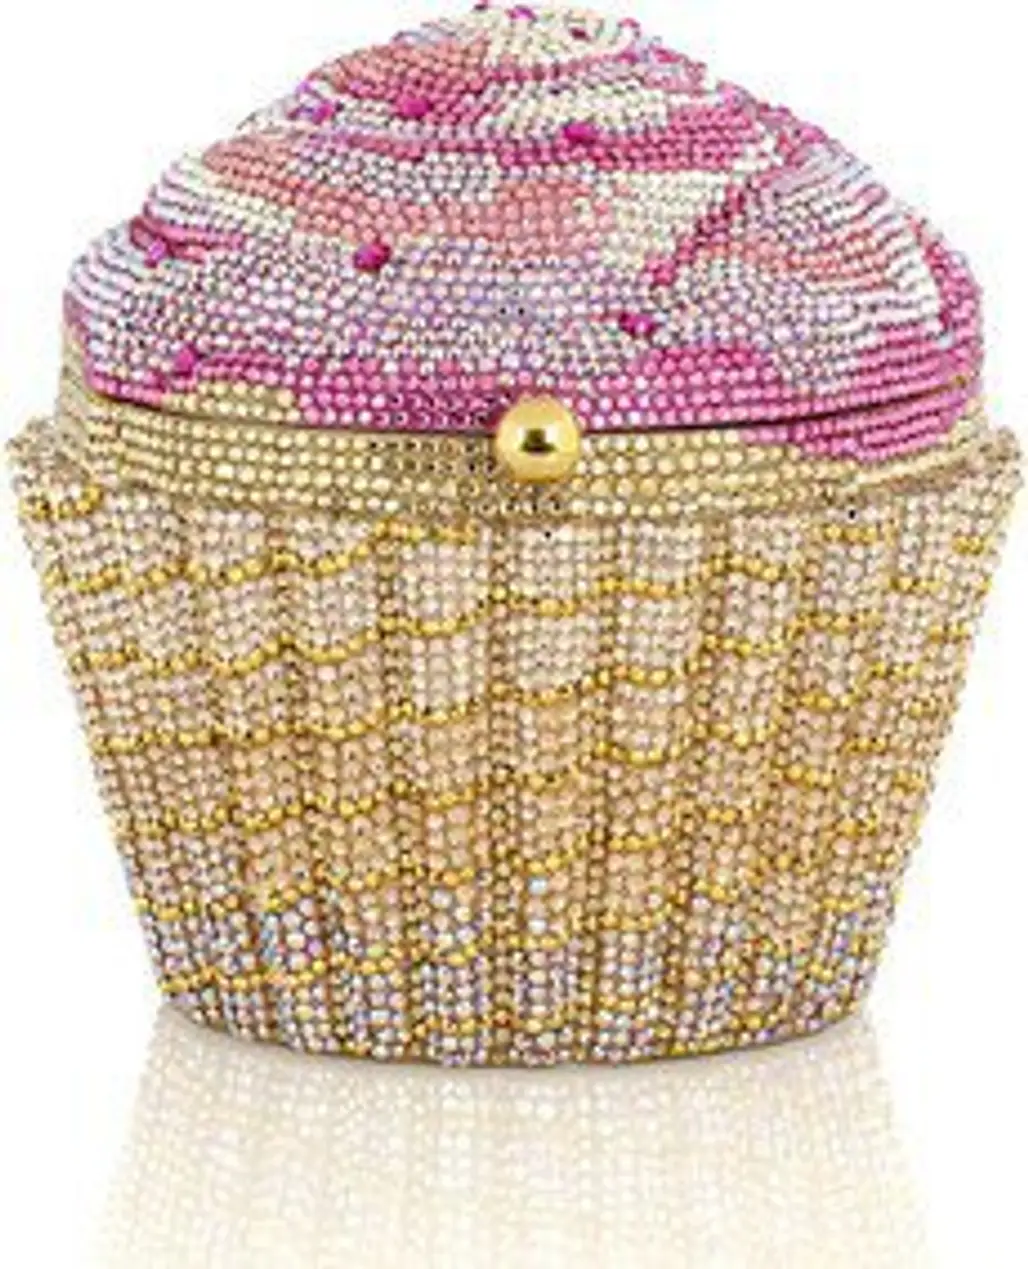 Judith Leiber Cupcake Crystal Embellished Clutch